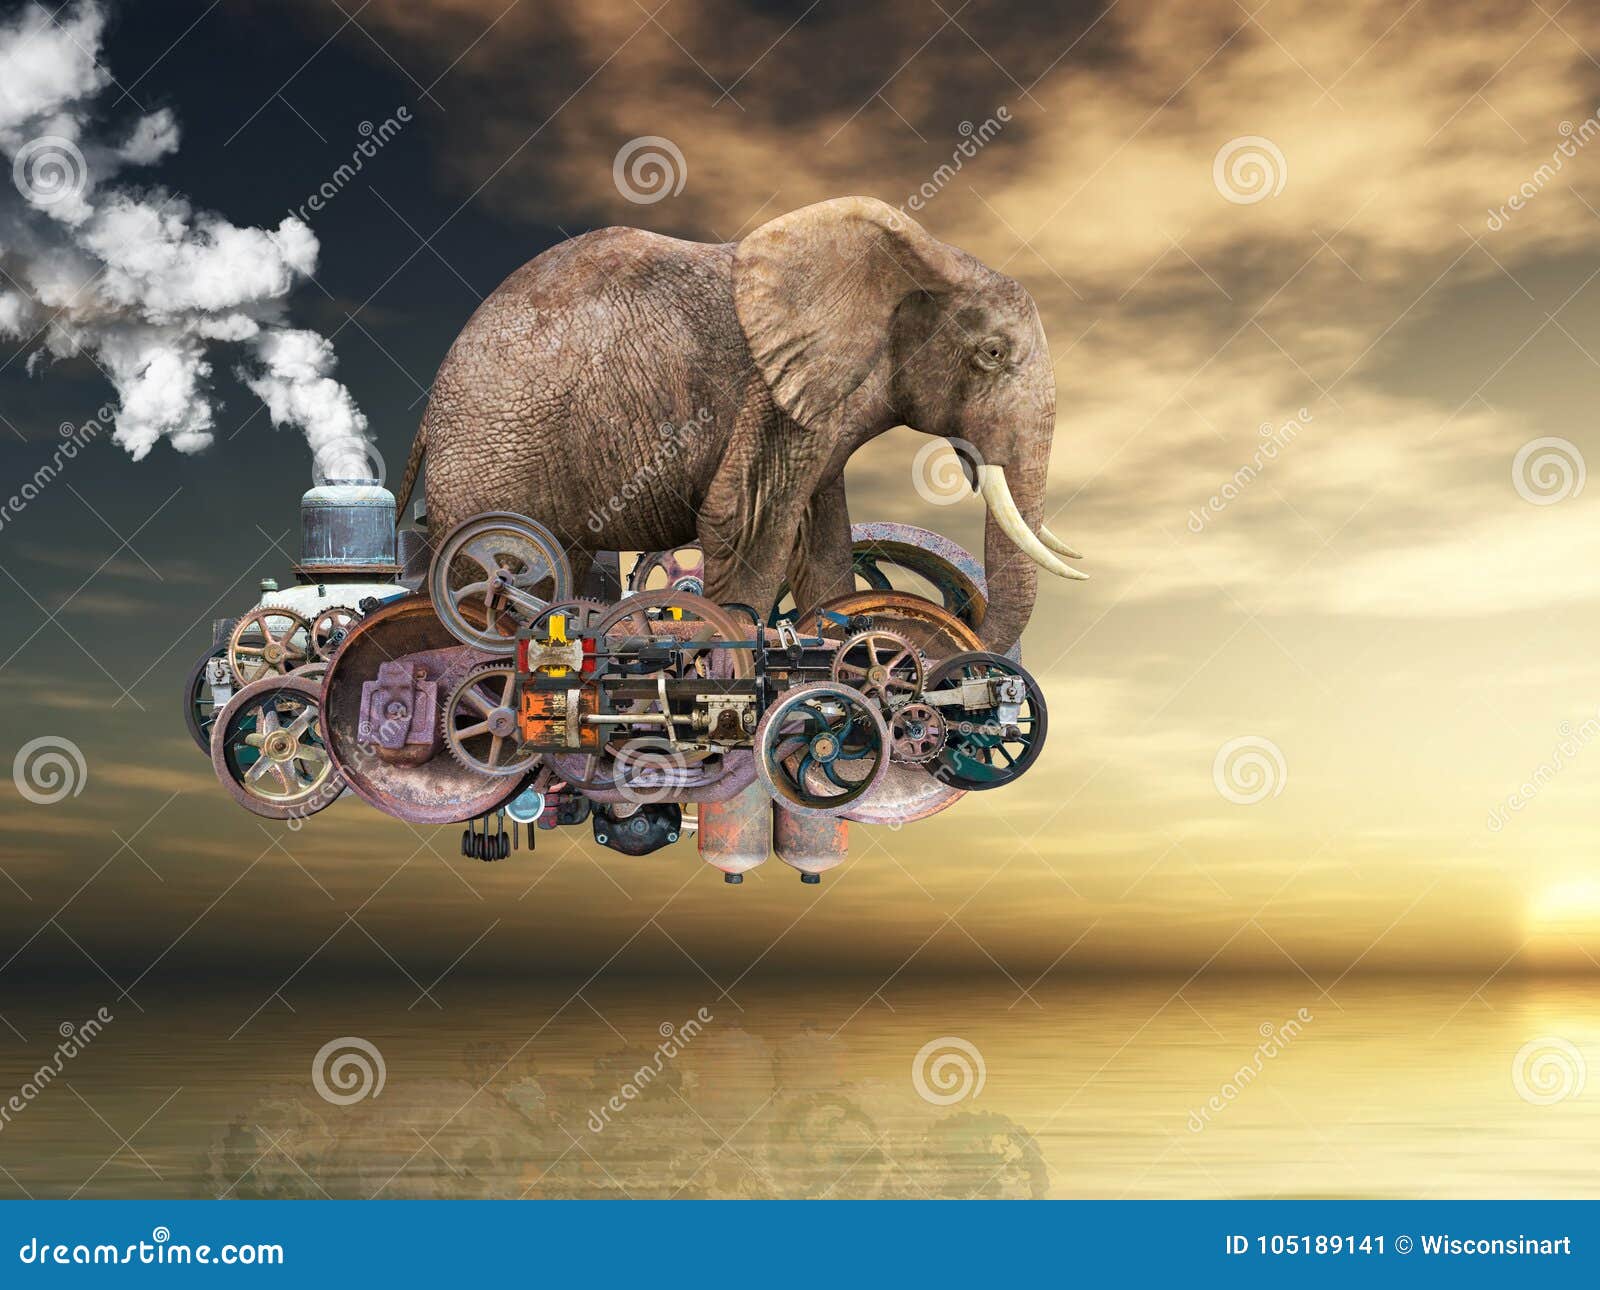 surreal flying steampunk machine, elephant